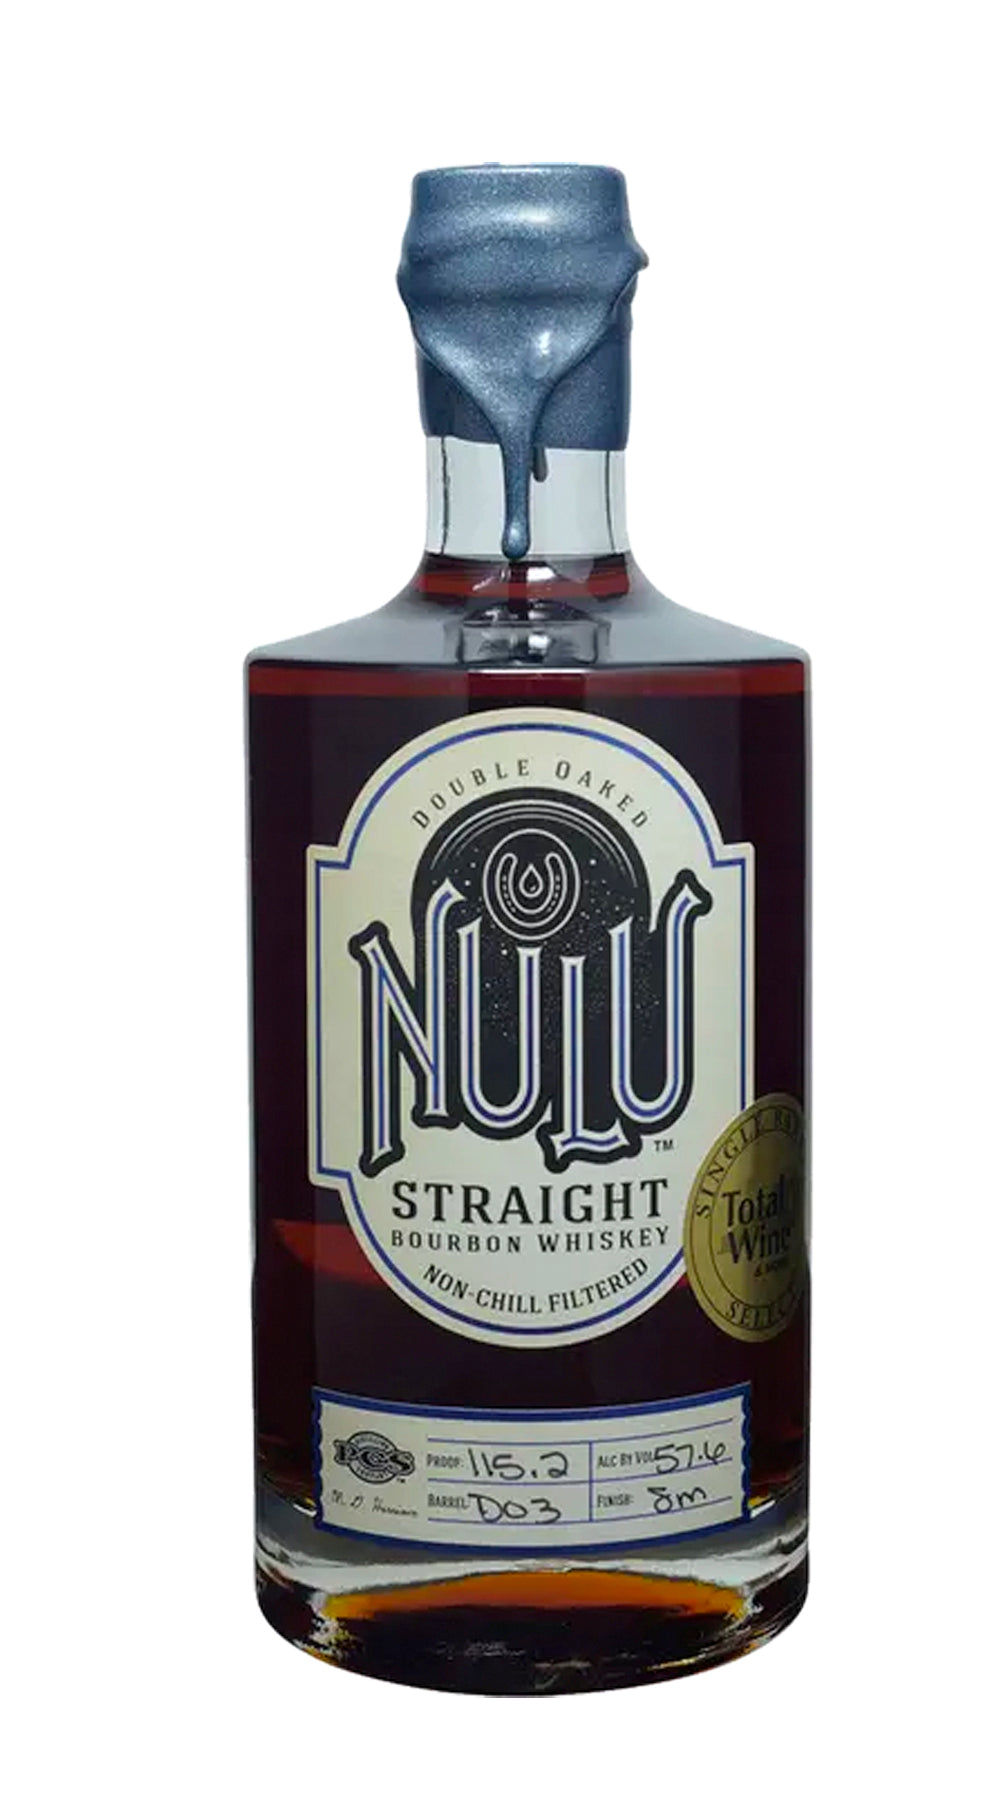 Nulu Double Oaked Straight Bourbon